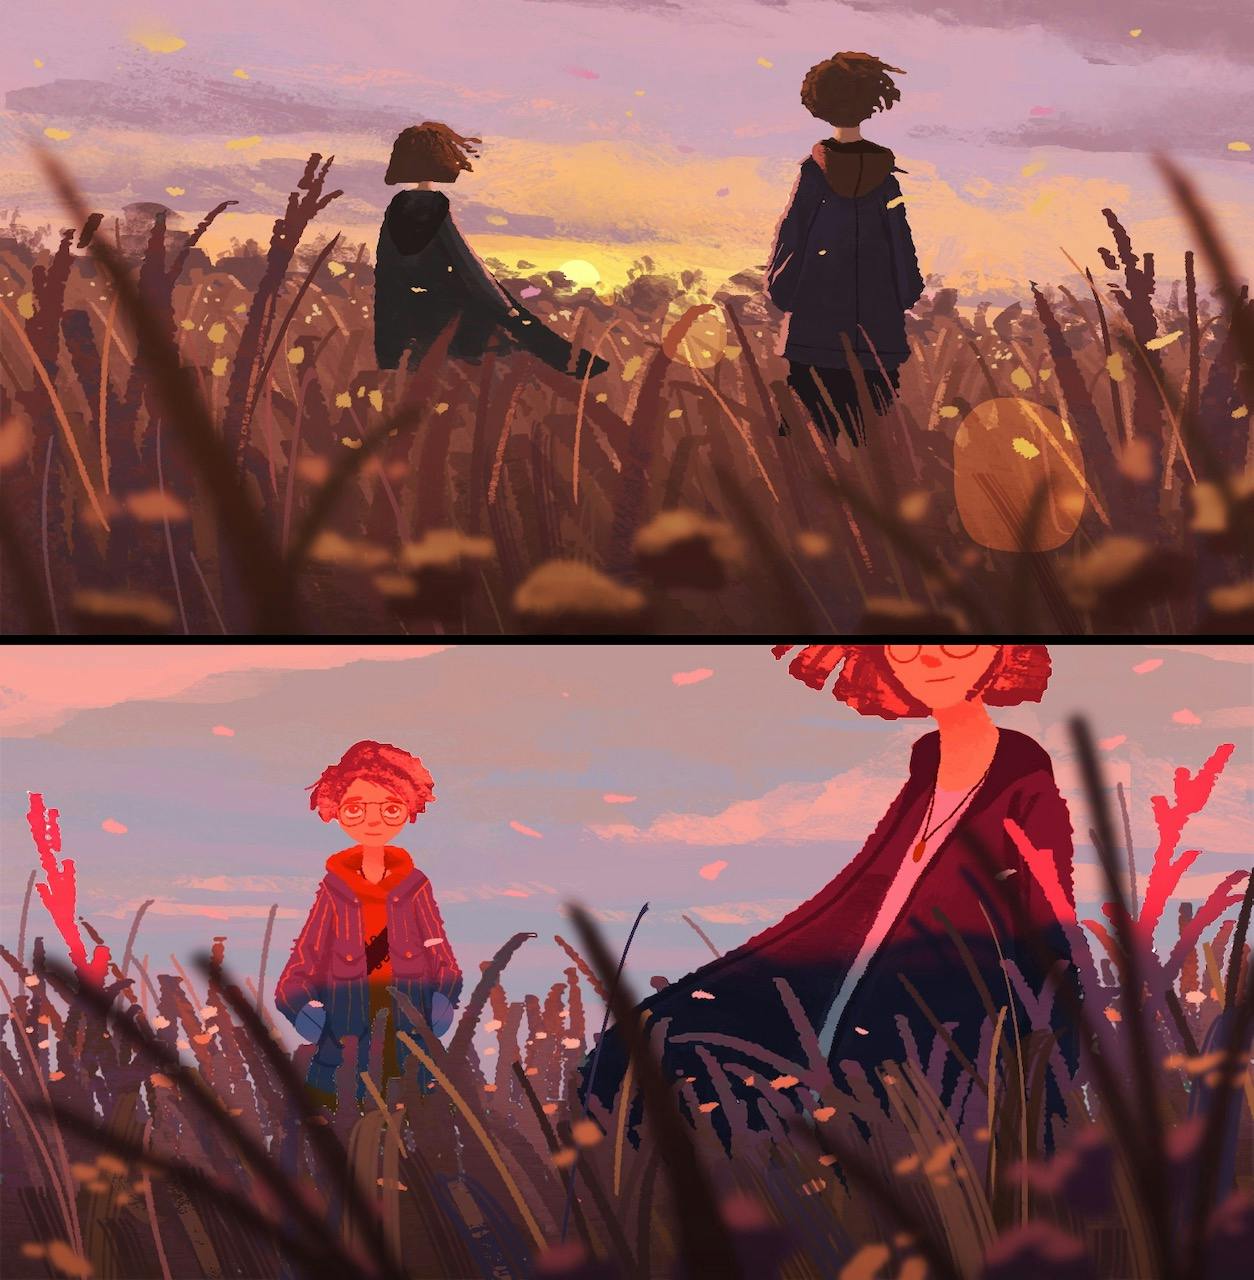 Two people in a field